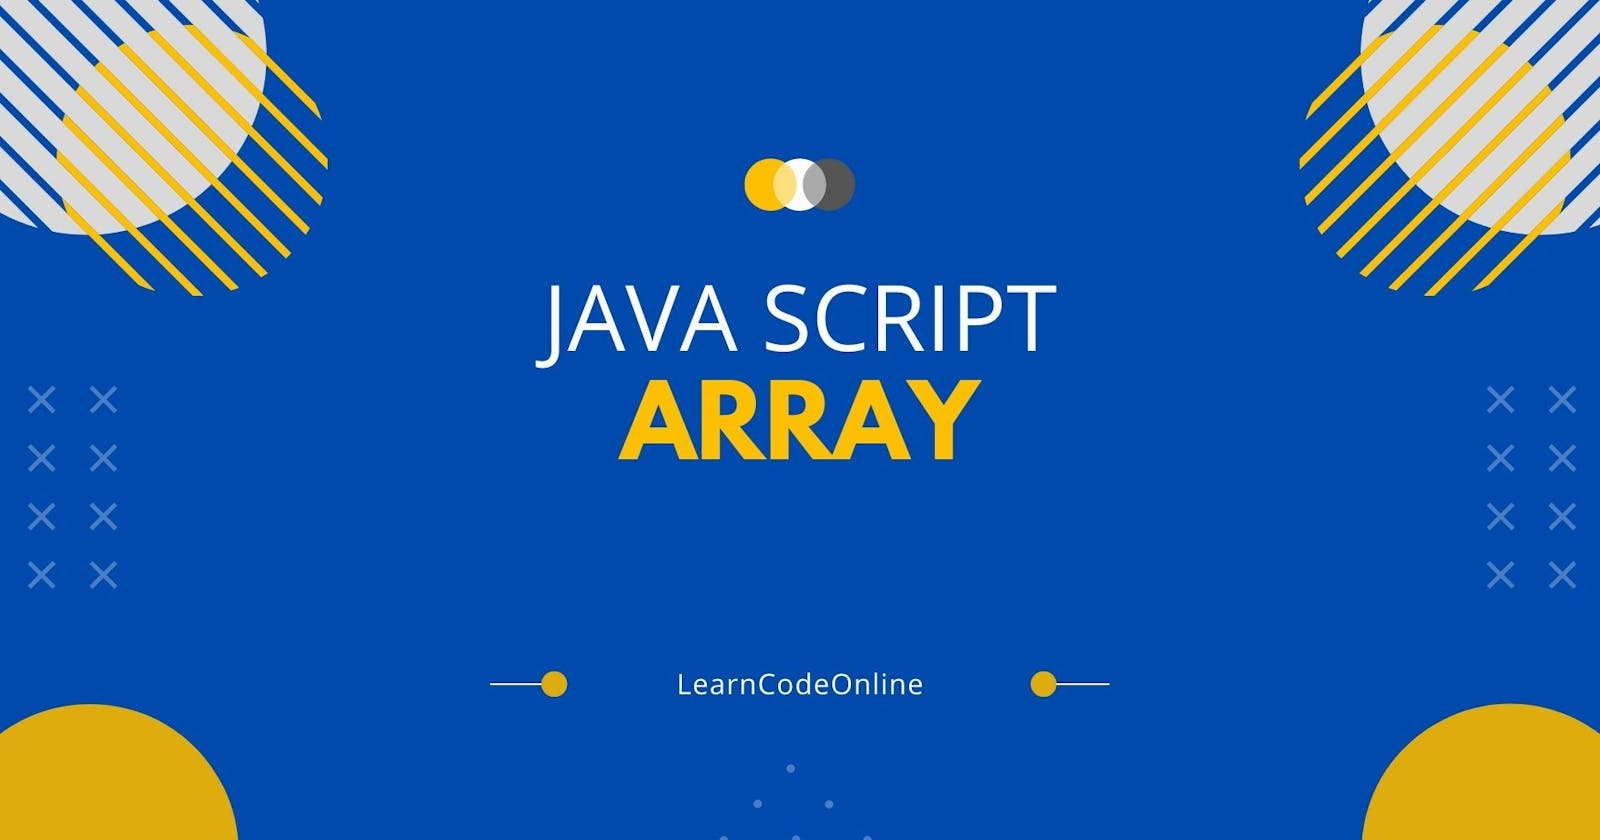 Arrays In JavaScript